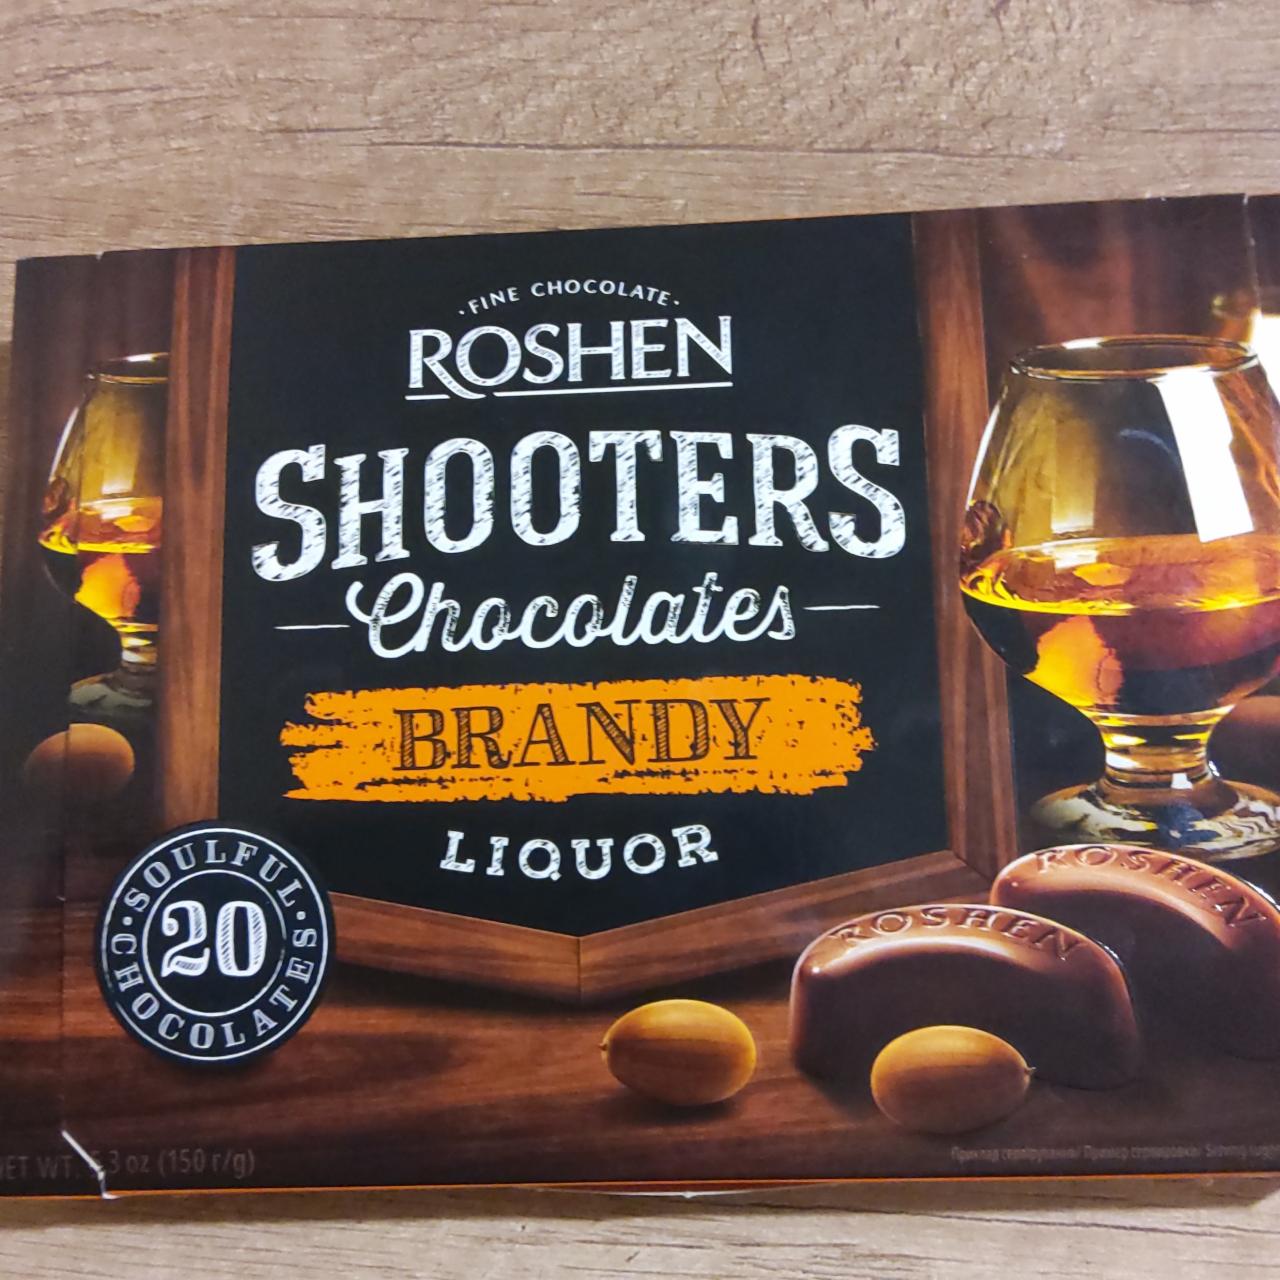 Fotografie - Roshen Shooters Chocolates Brandy Liquor